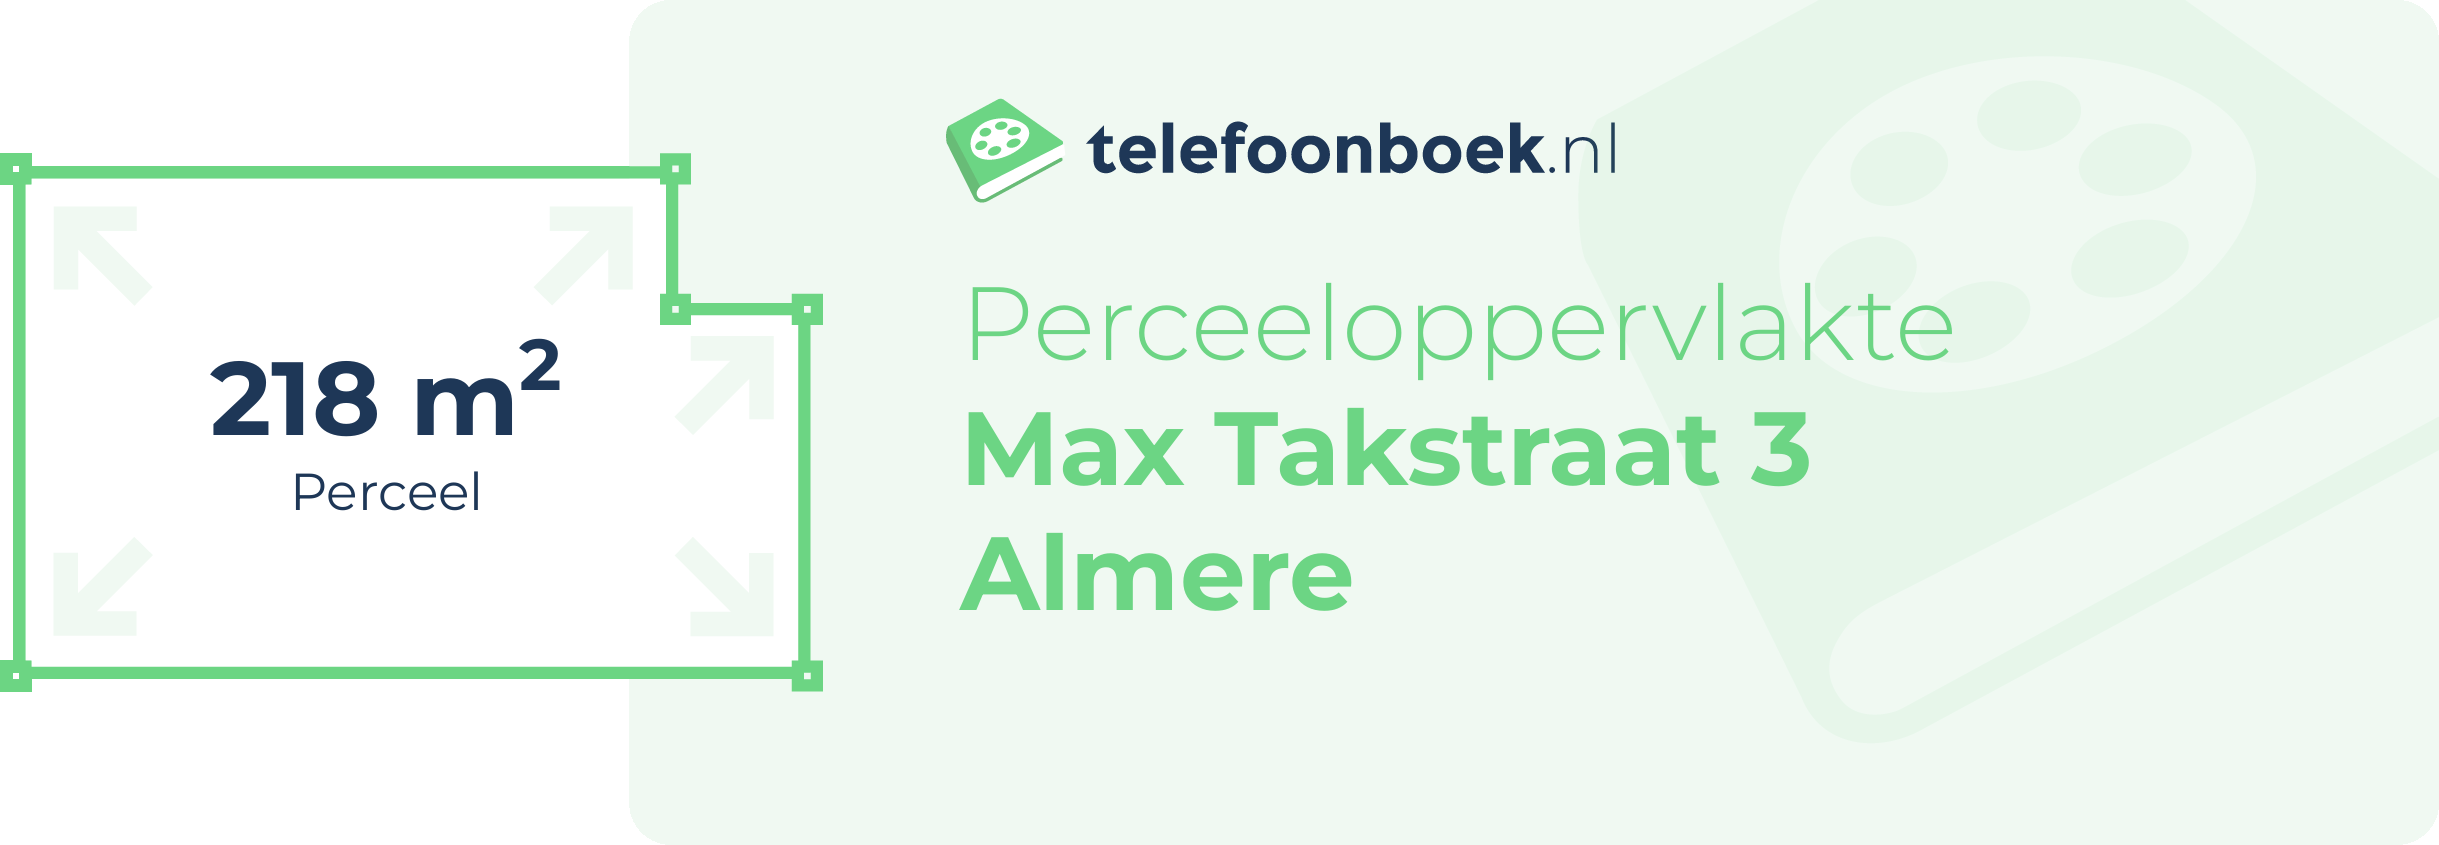 Perceeloppervlakte Max Takstraat 3 Almere